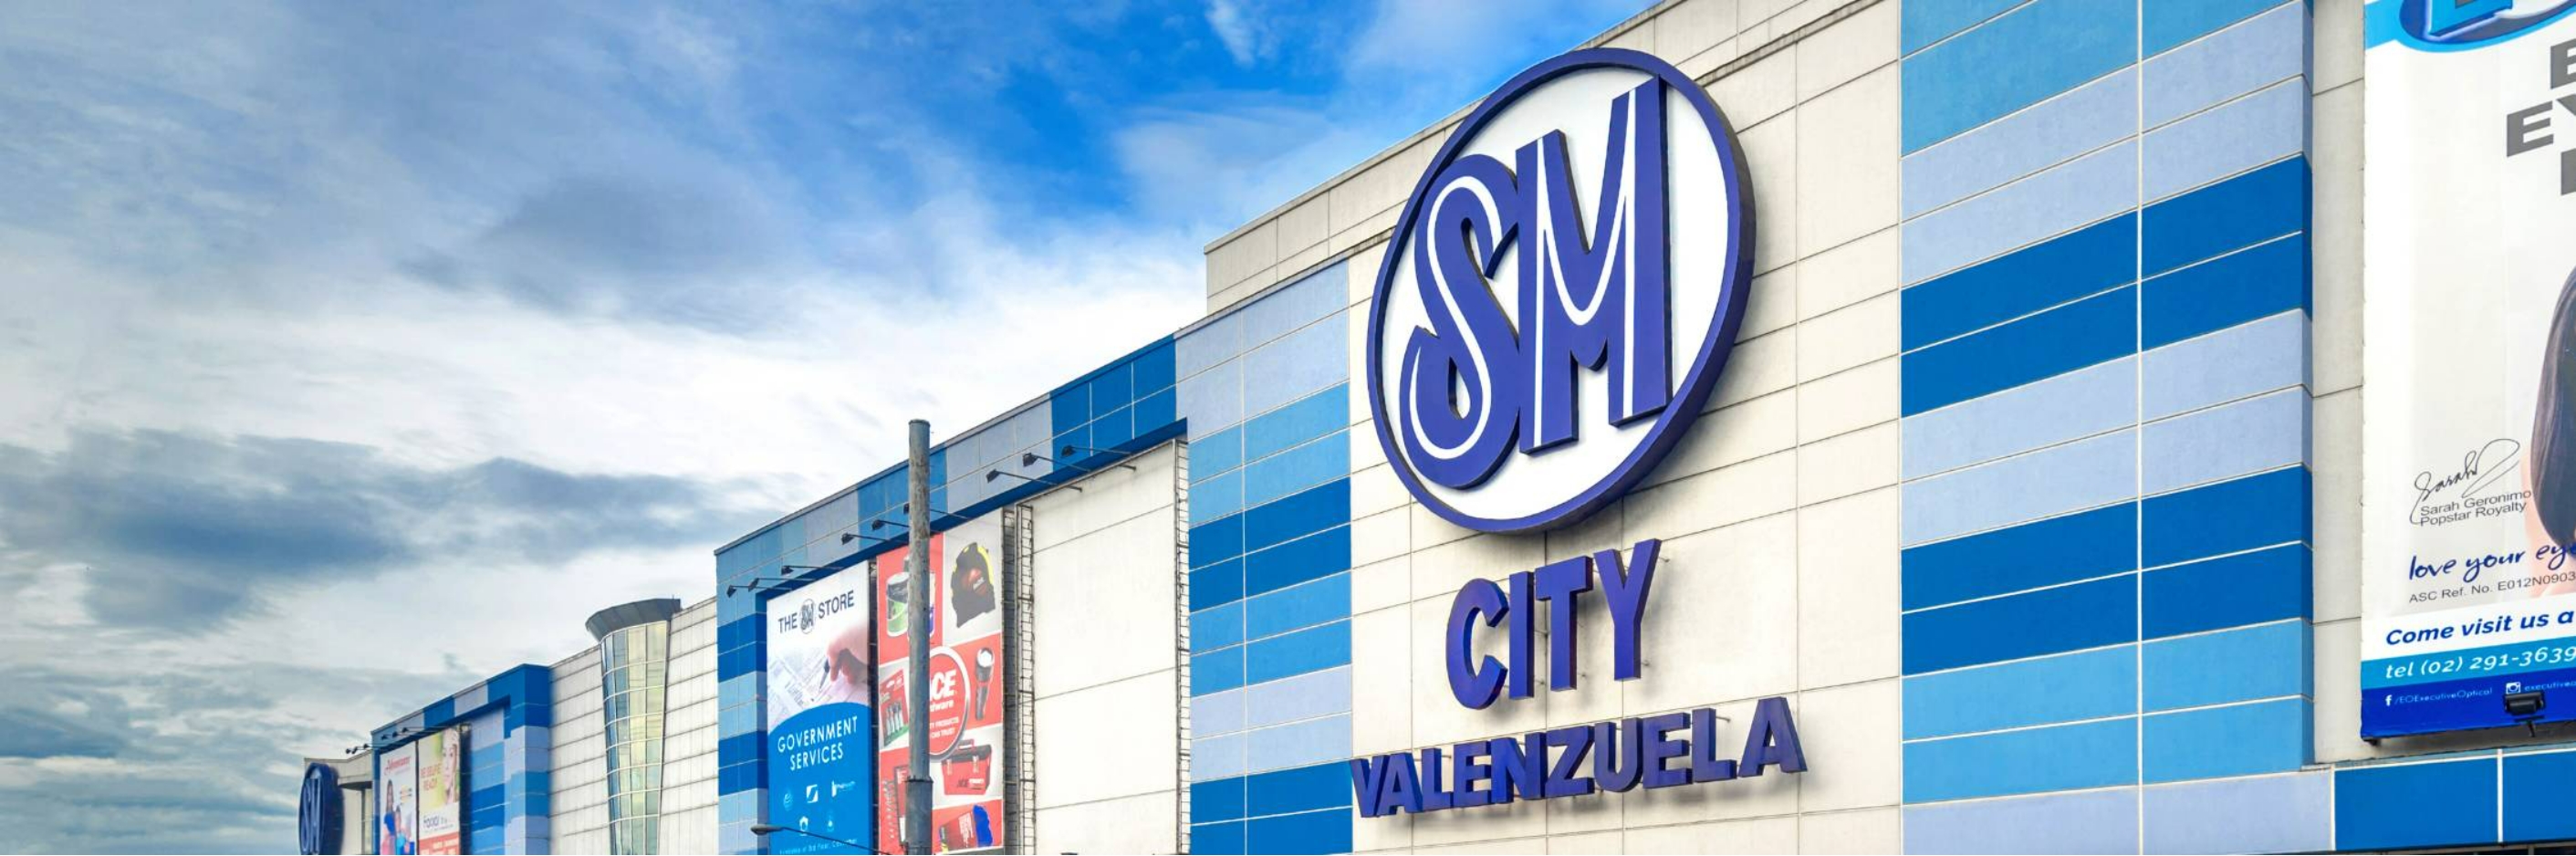 SM City Valenzuela